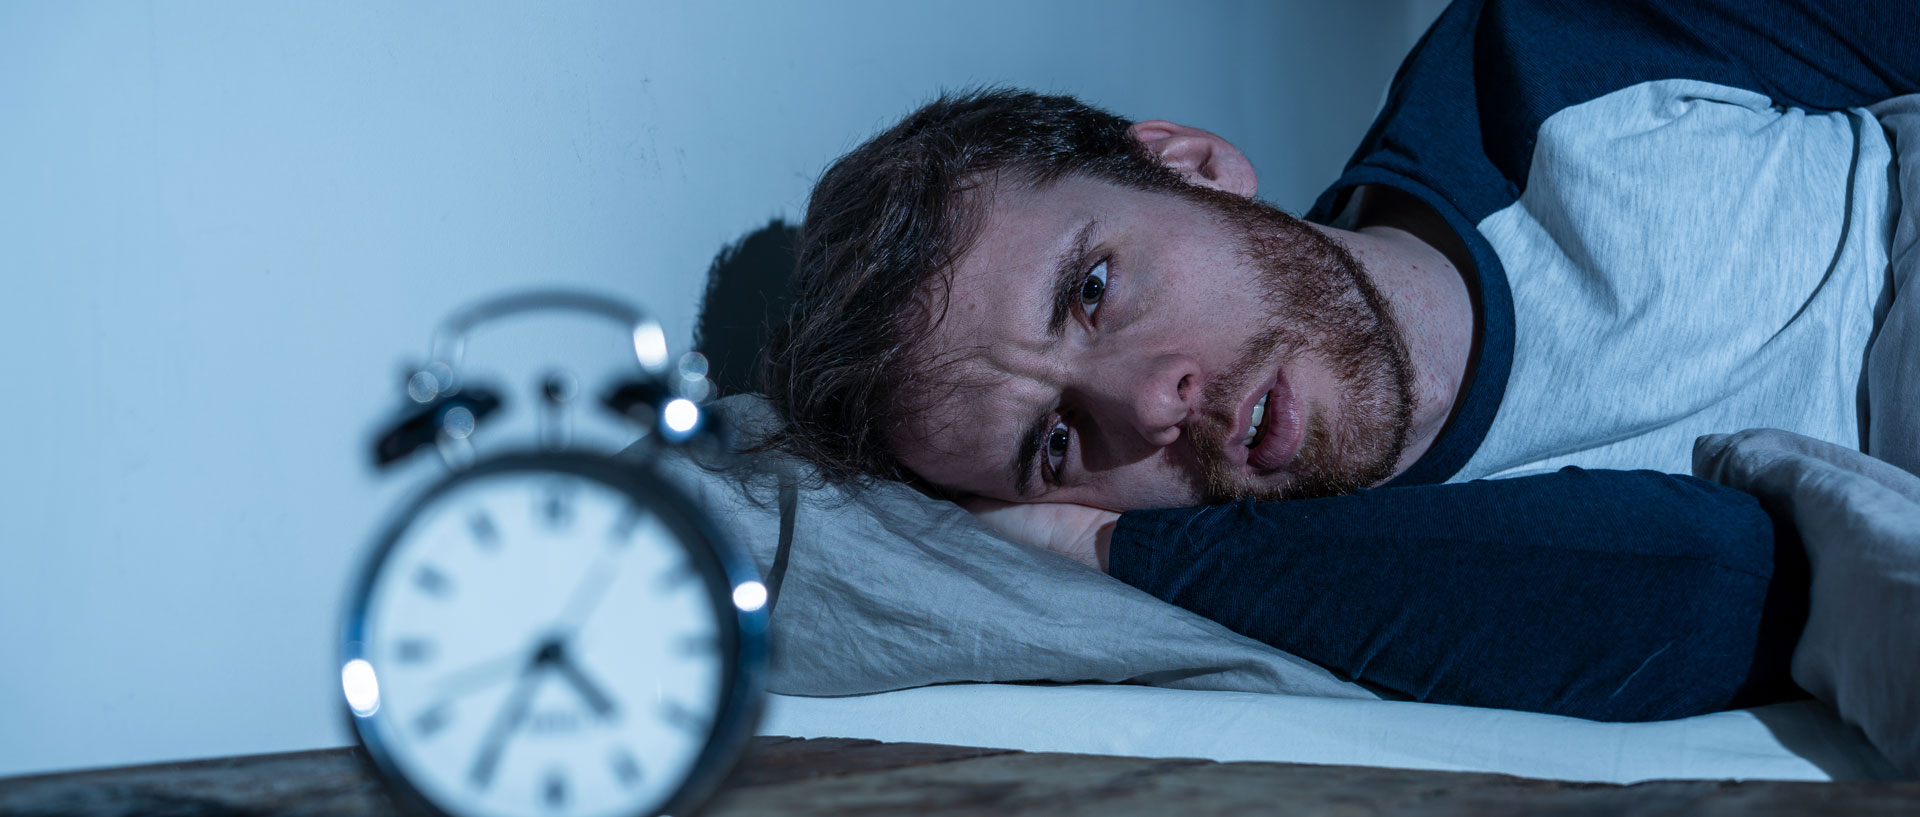 What causes sleep anxiety?